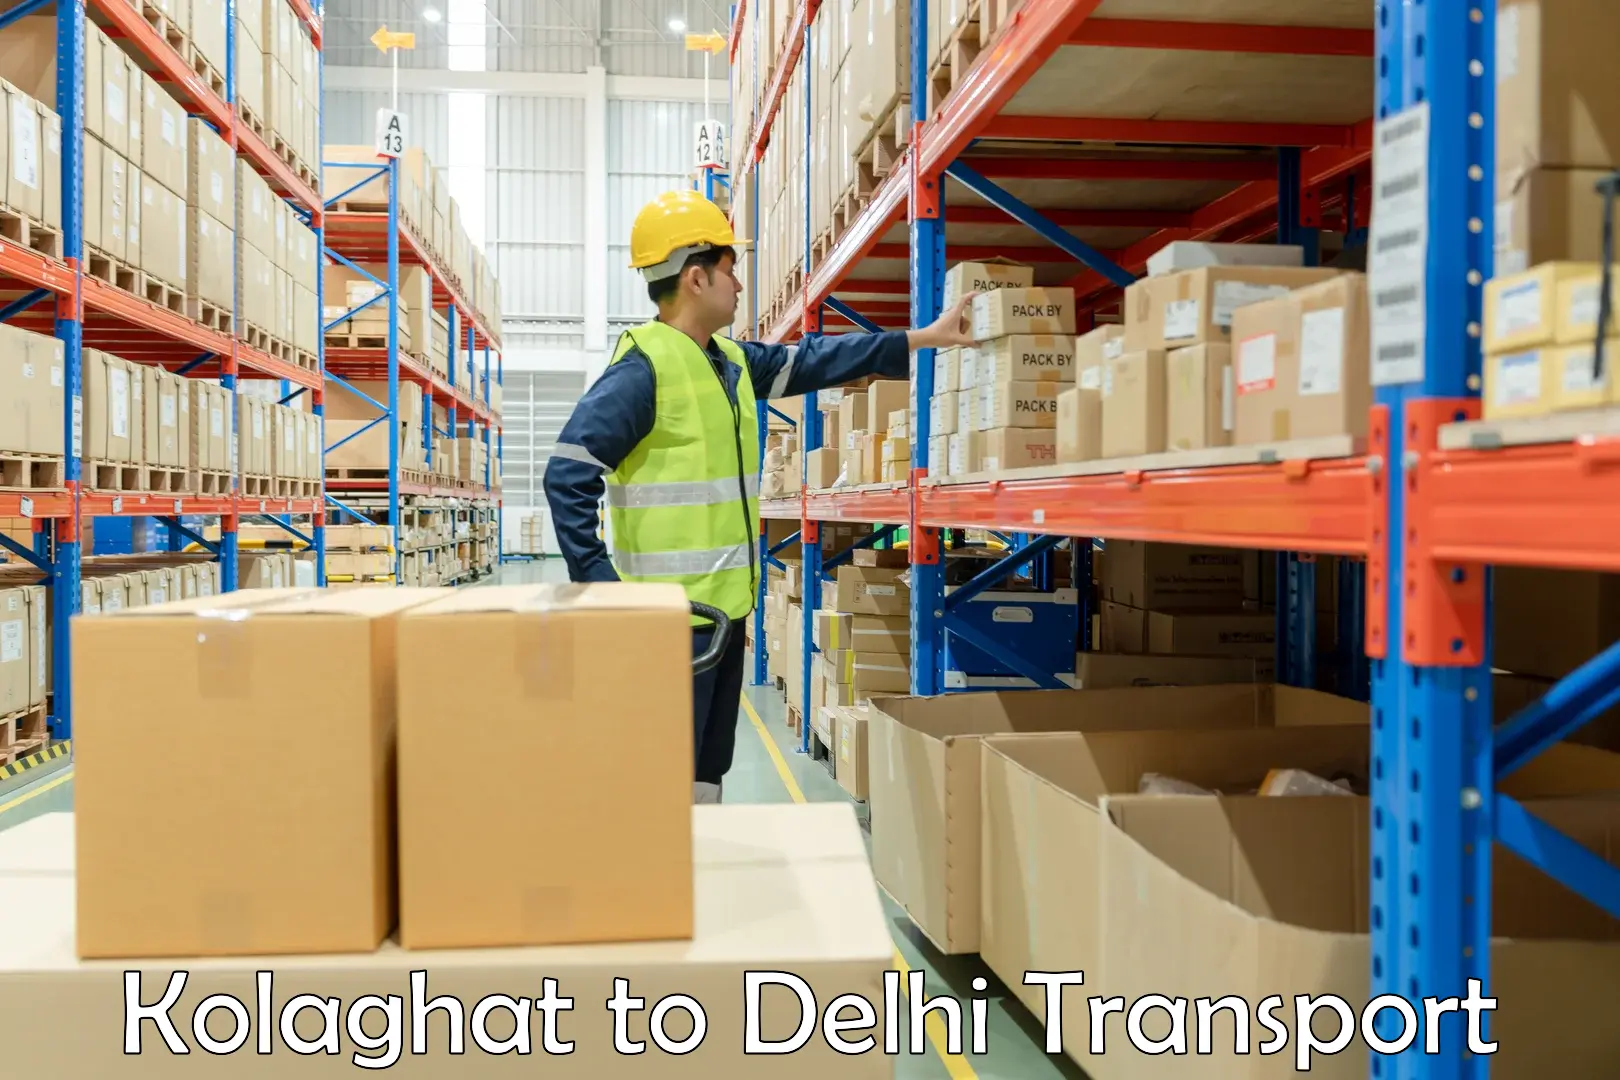 Truck transport companies in India Kolaghat to Delhi